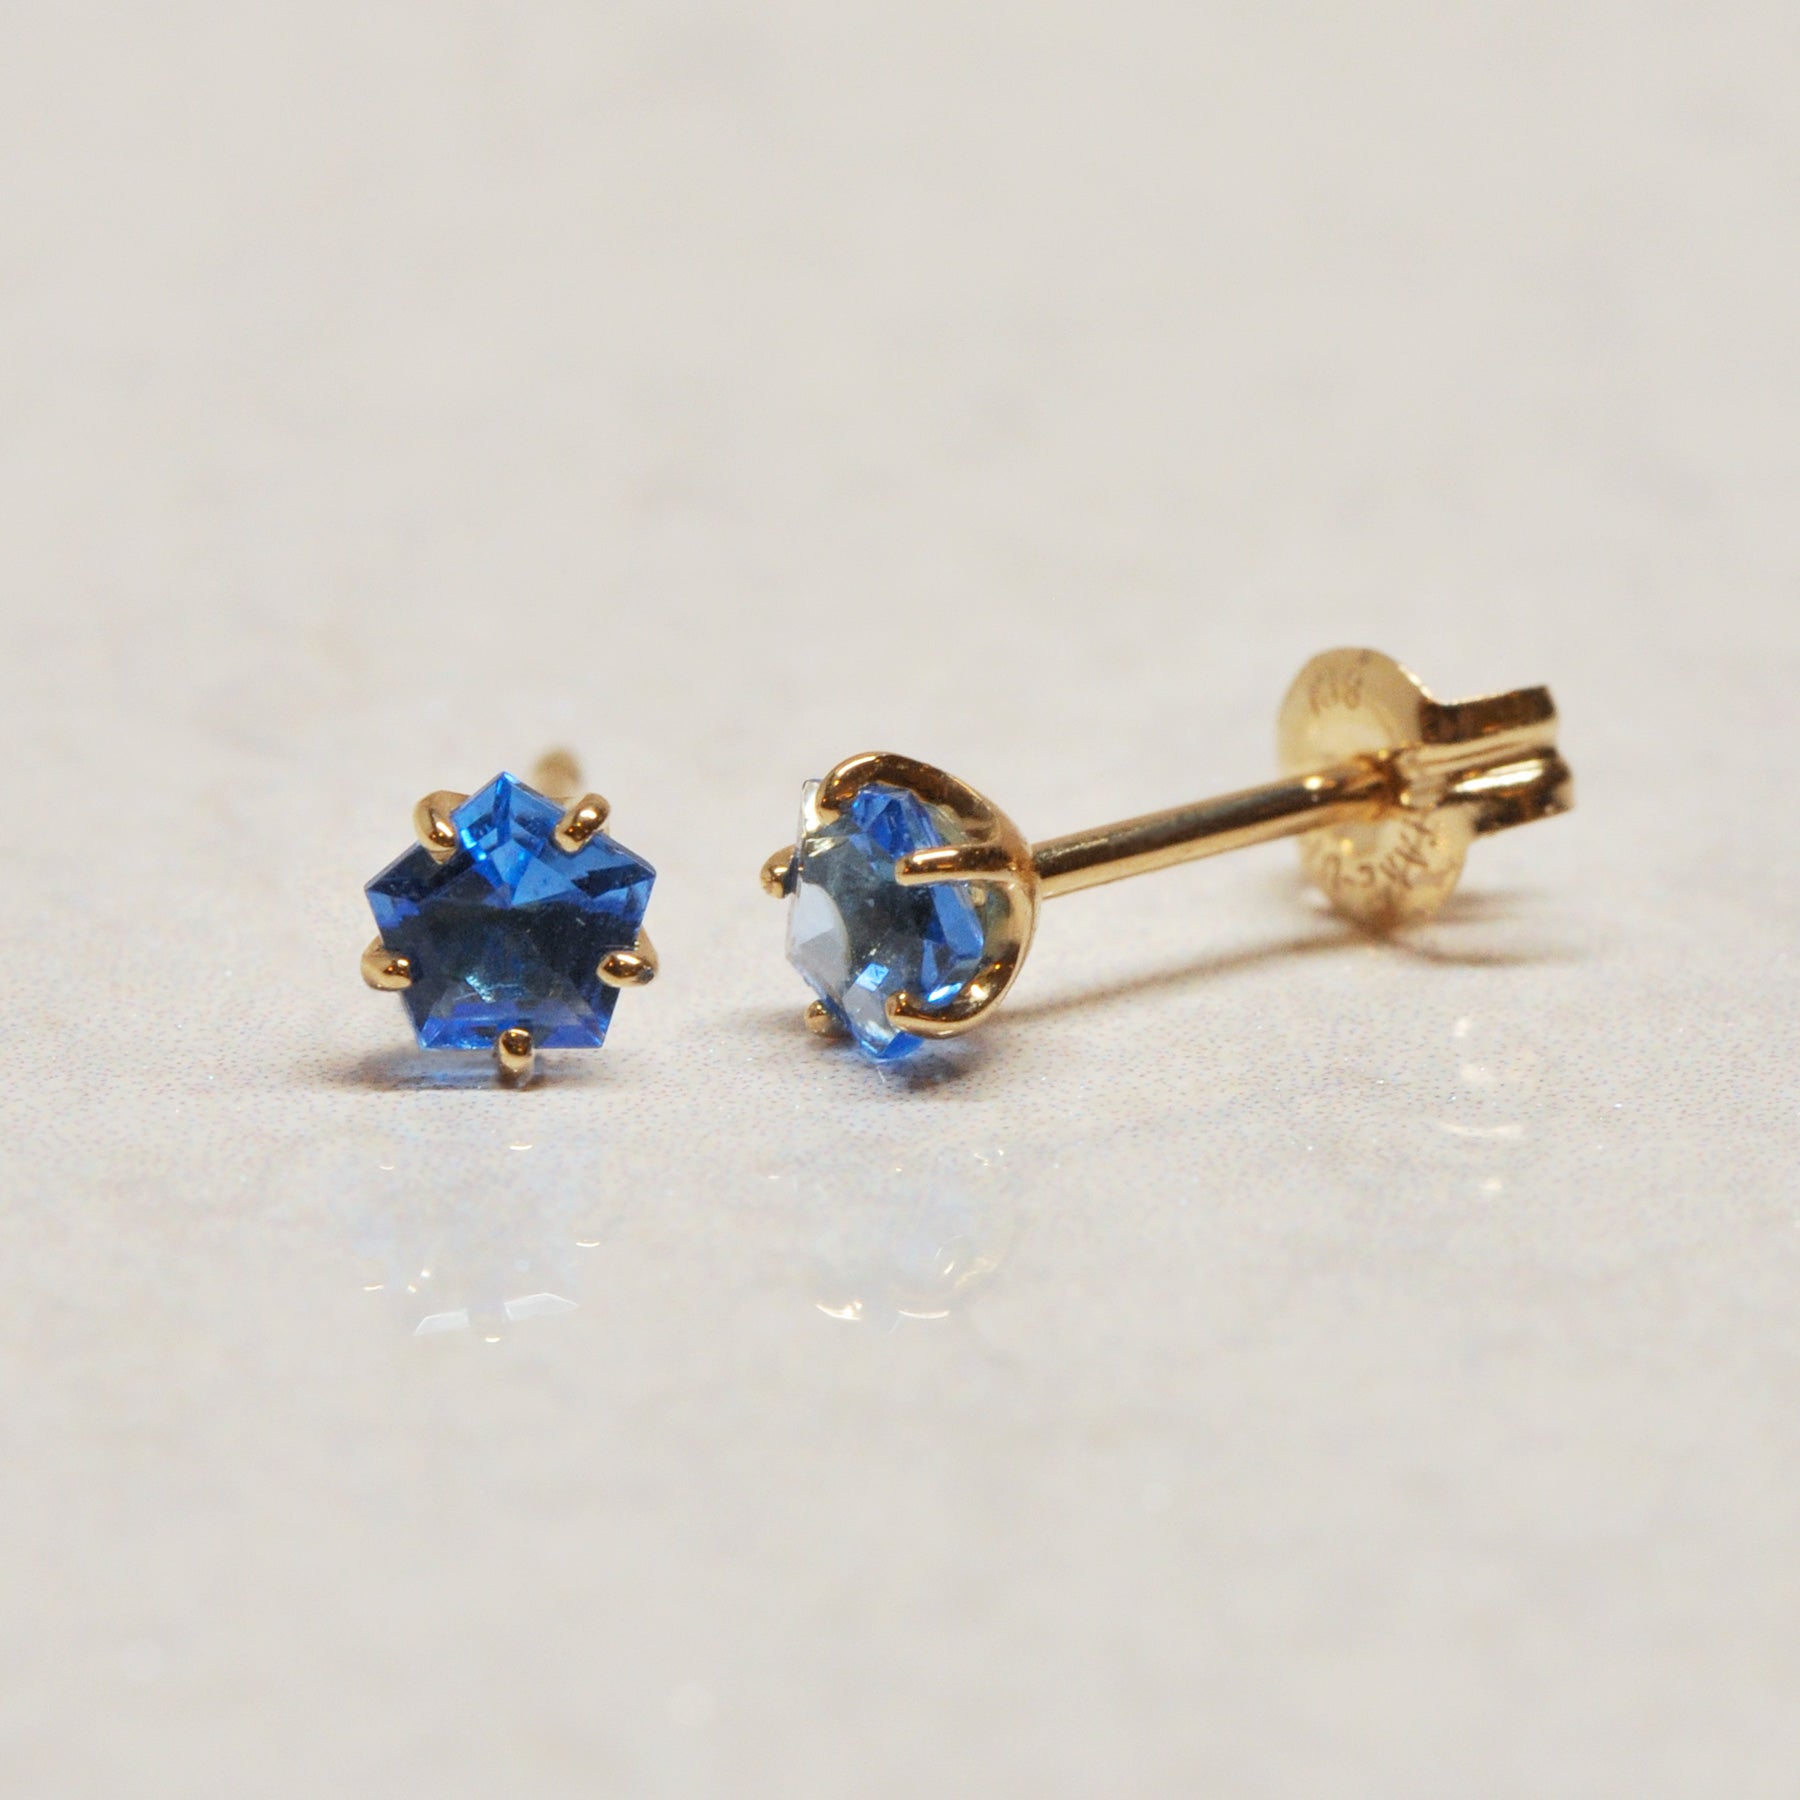 [Second Earrings] 18K Yellow Gold Blue Quartz Pentagon Cut Earrings - Product Image